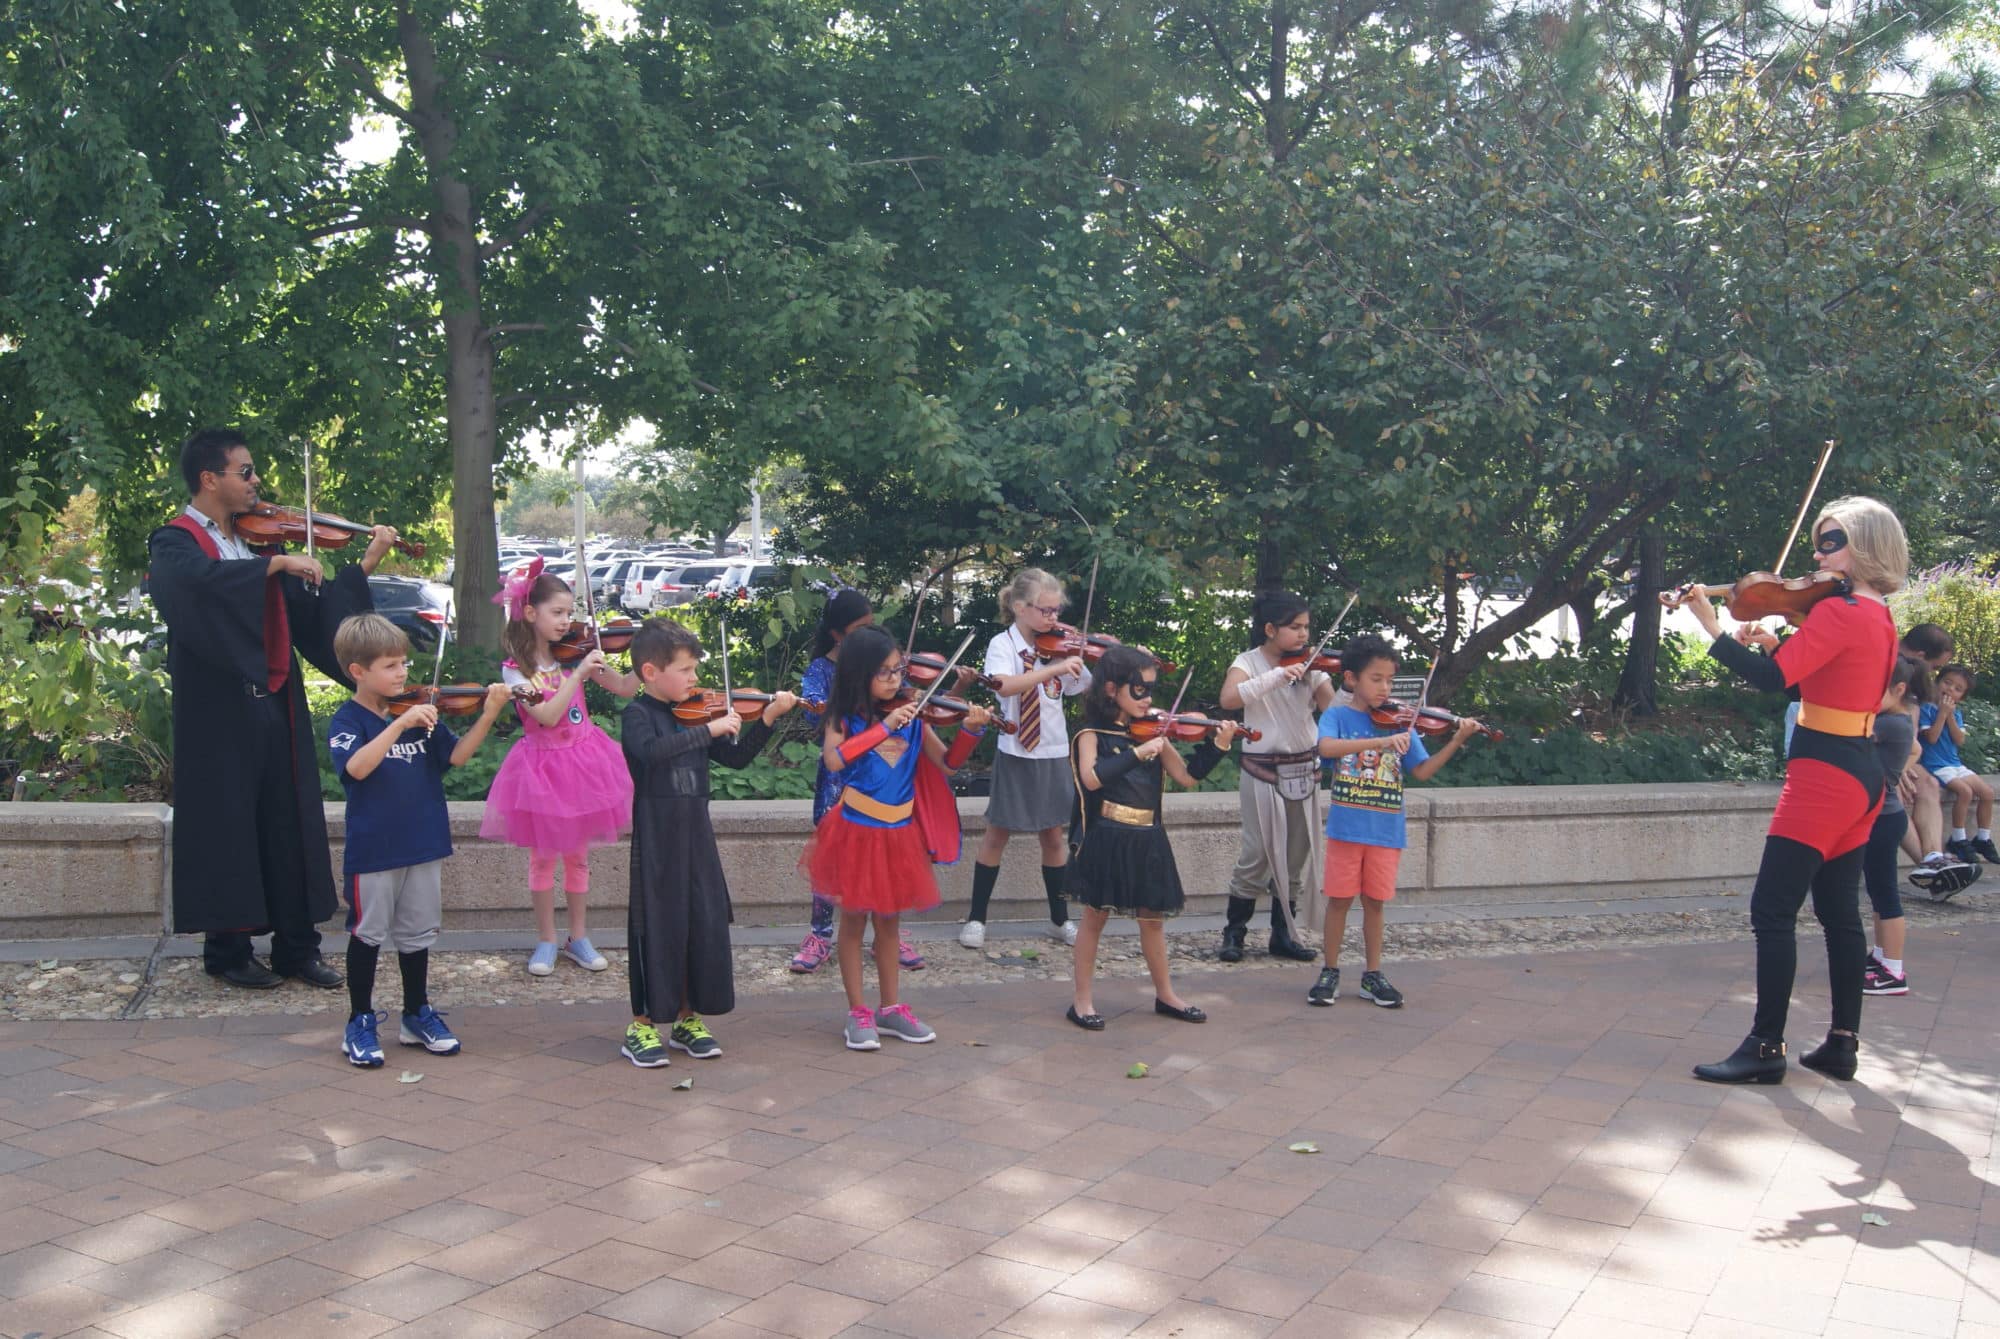 Vivaldi Strings performs at Hermann Park in October 2016